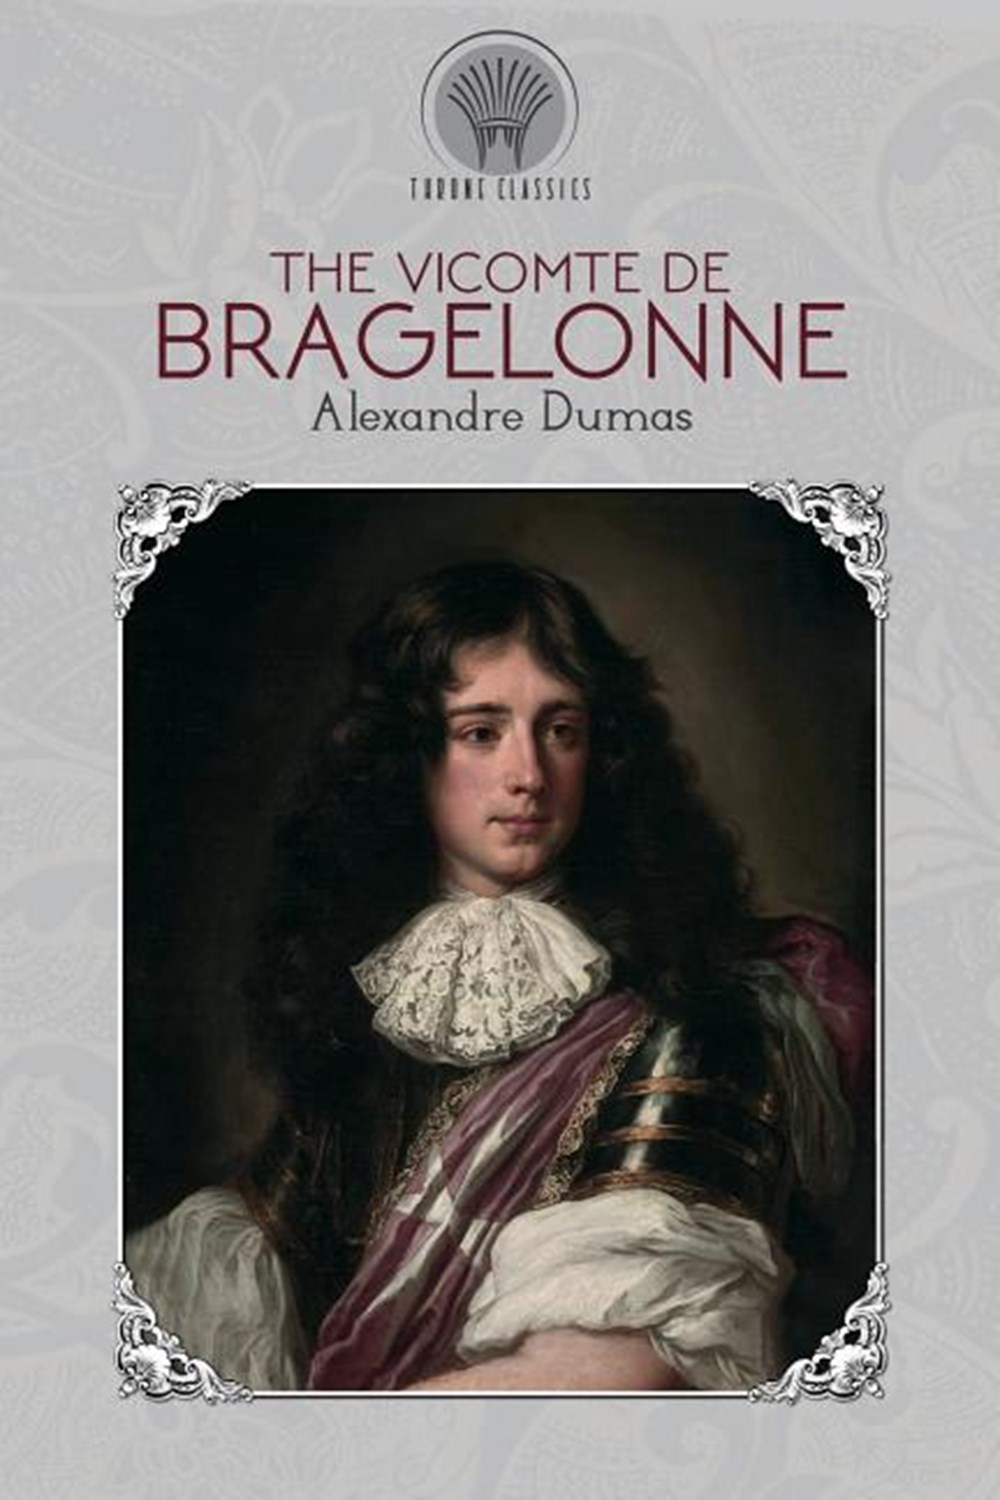 Vicomte De Bragelonne